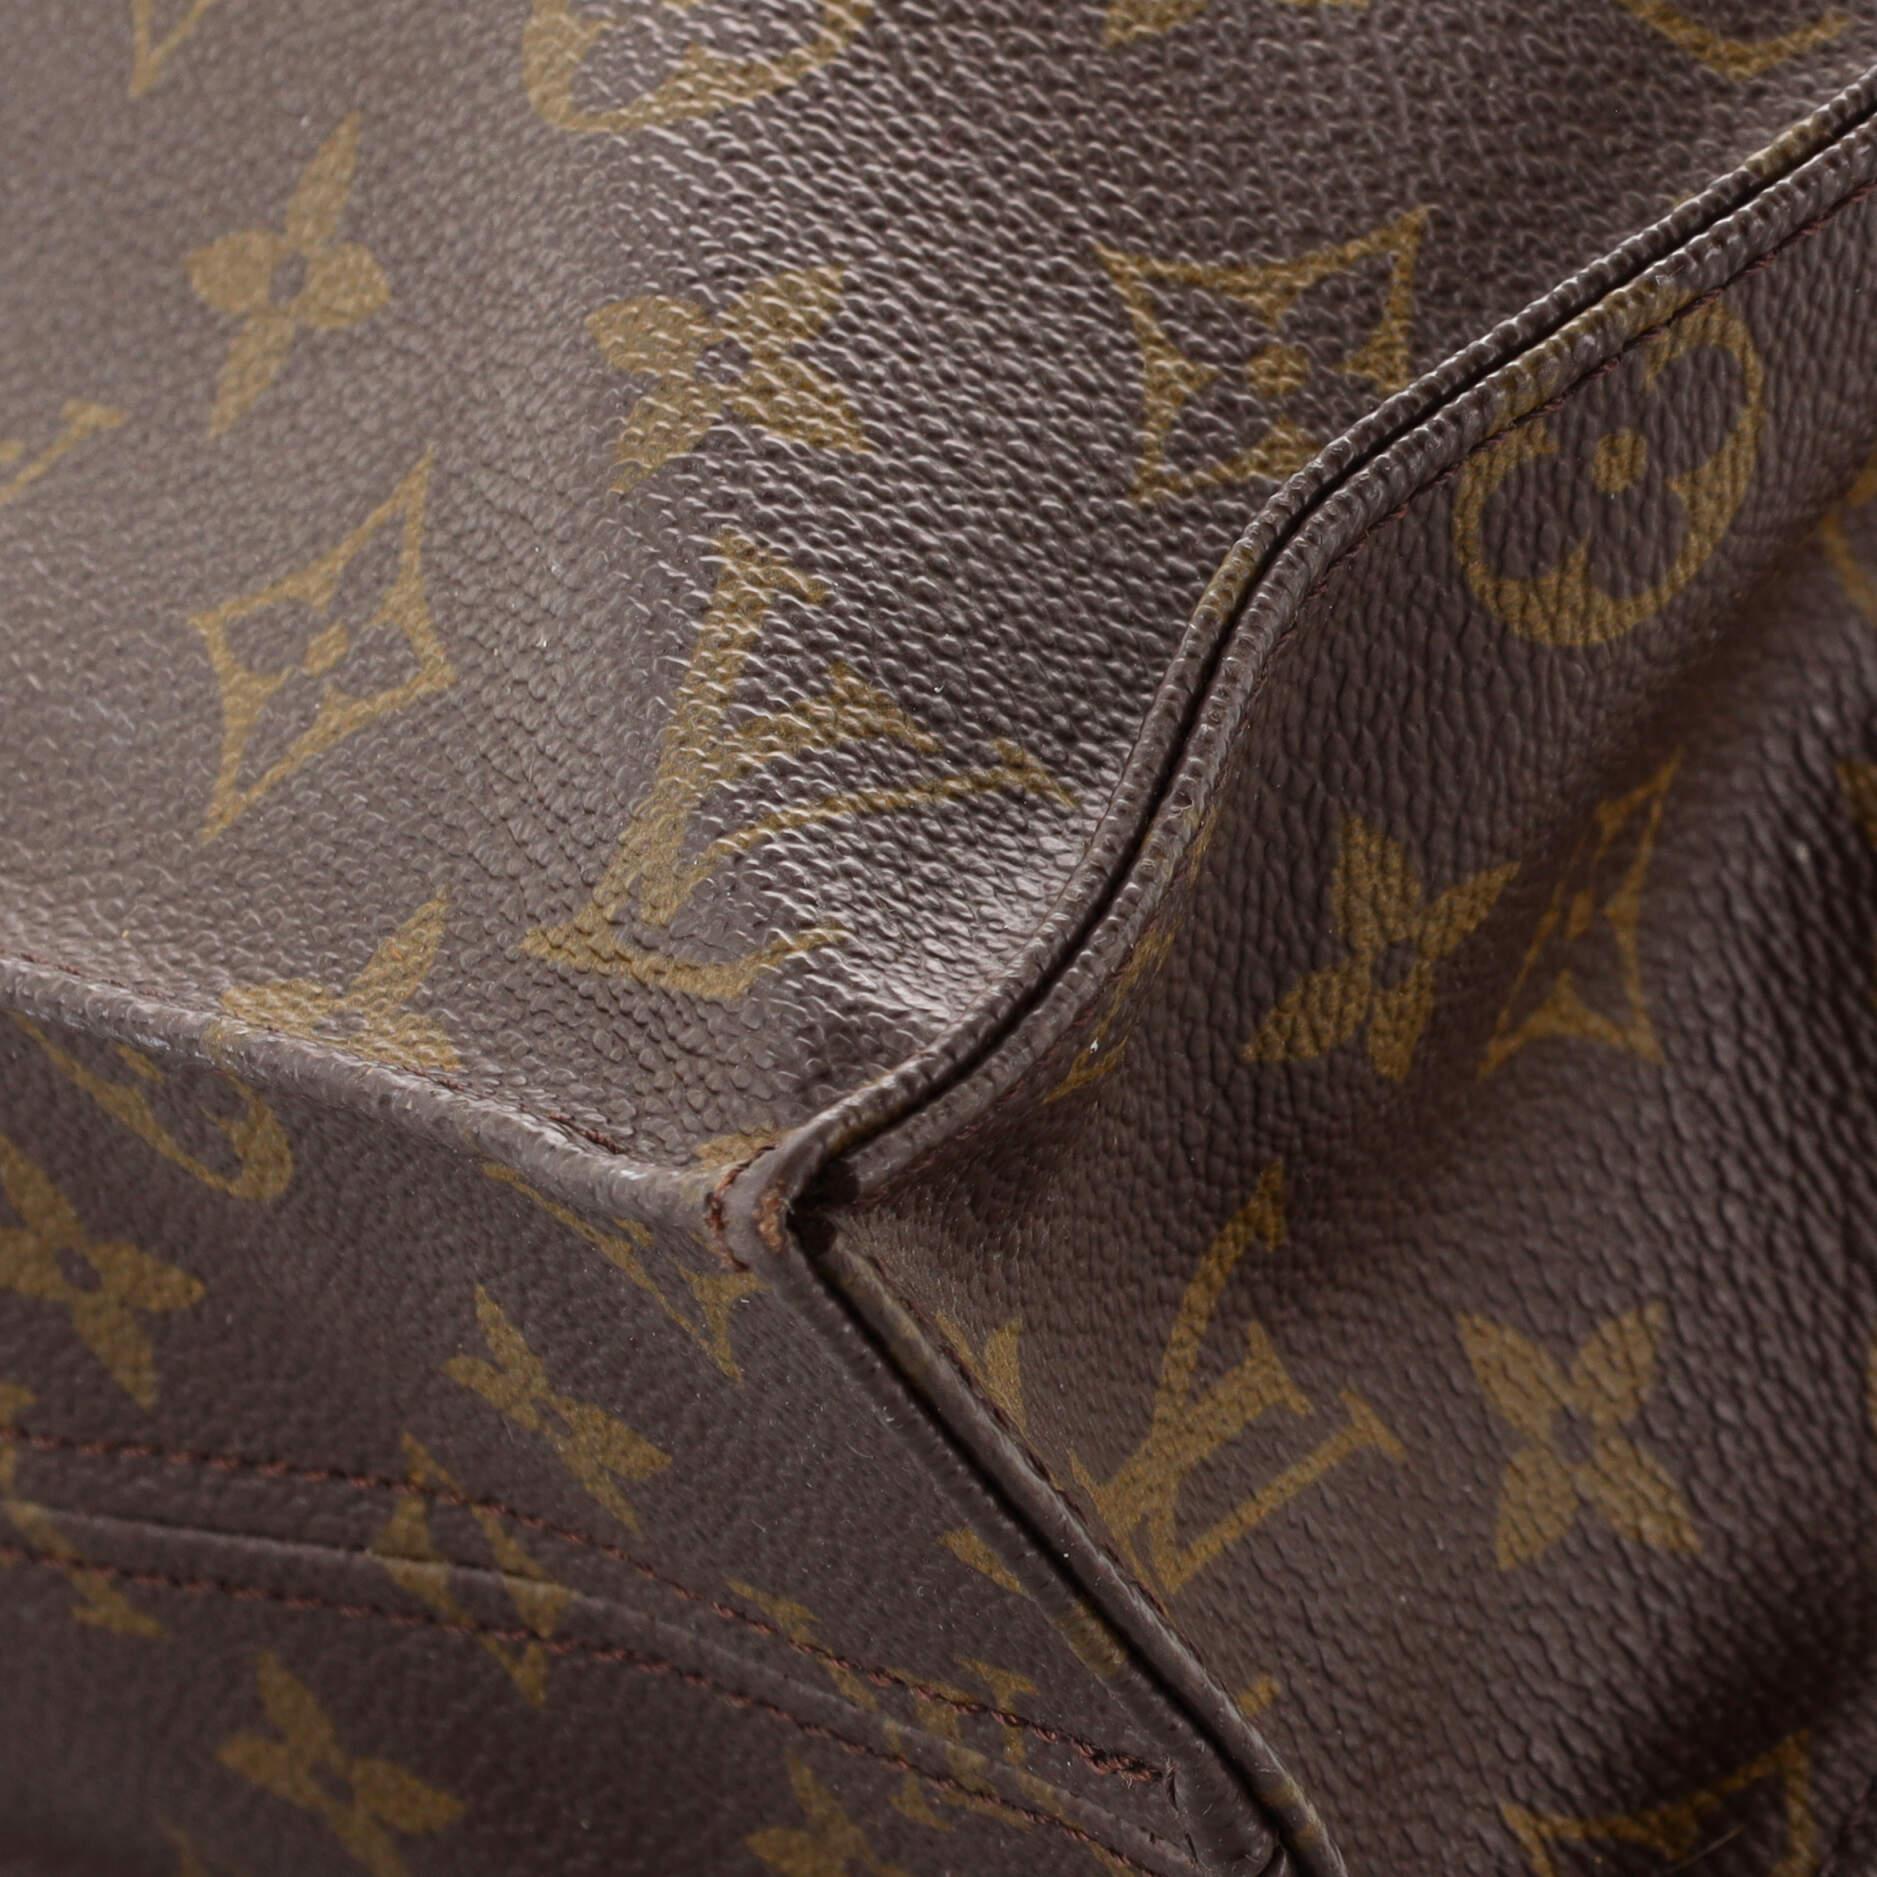 Black Louis Vuitton Sac Plat Handbag Monogram Canvas GM